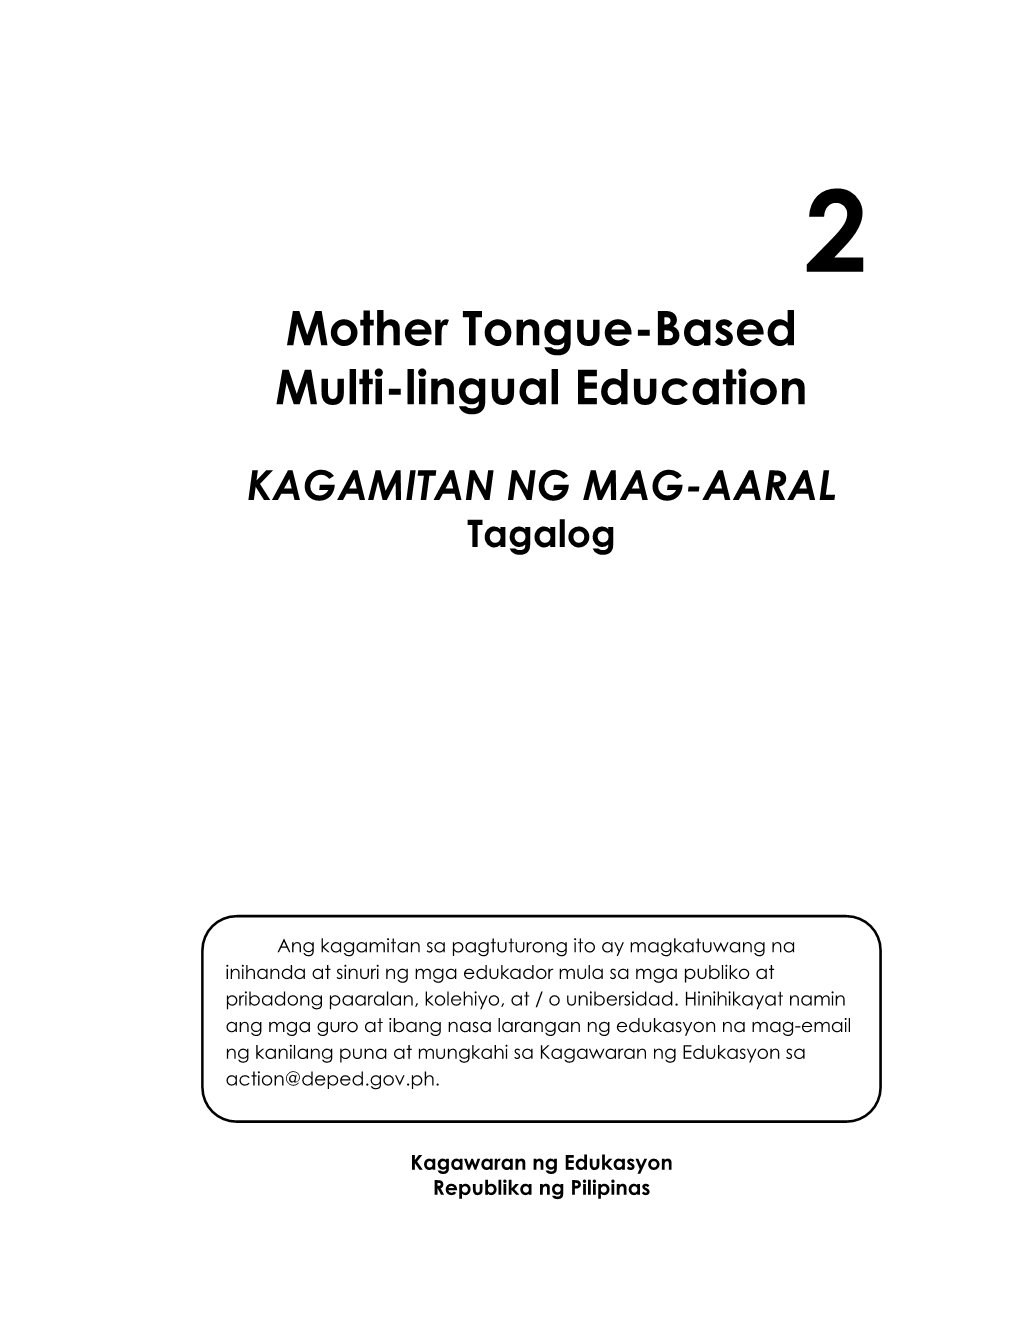 Mother Tongue-Based Multi-Lingual Education